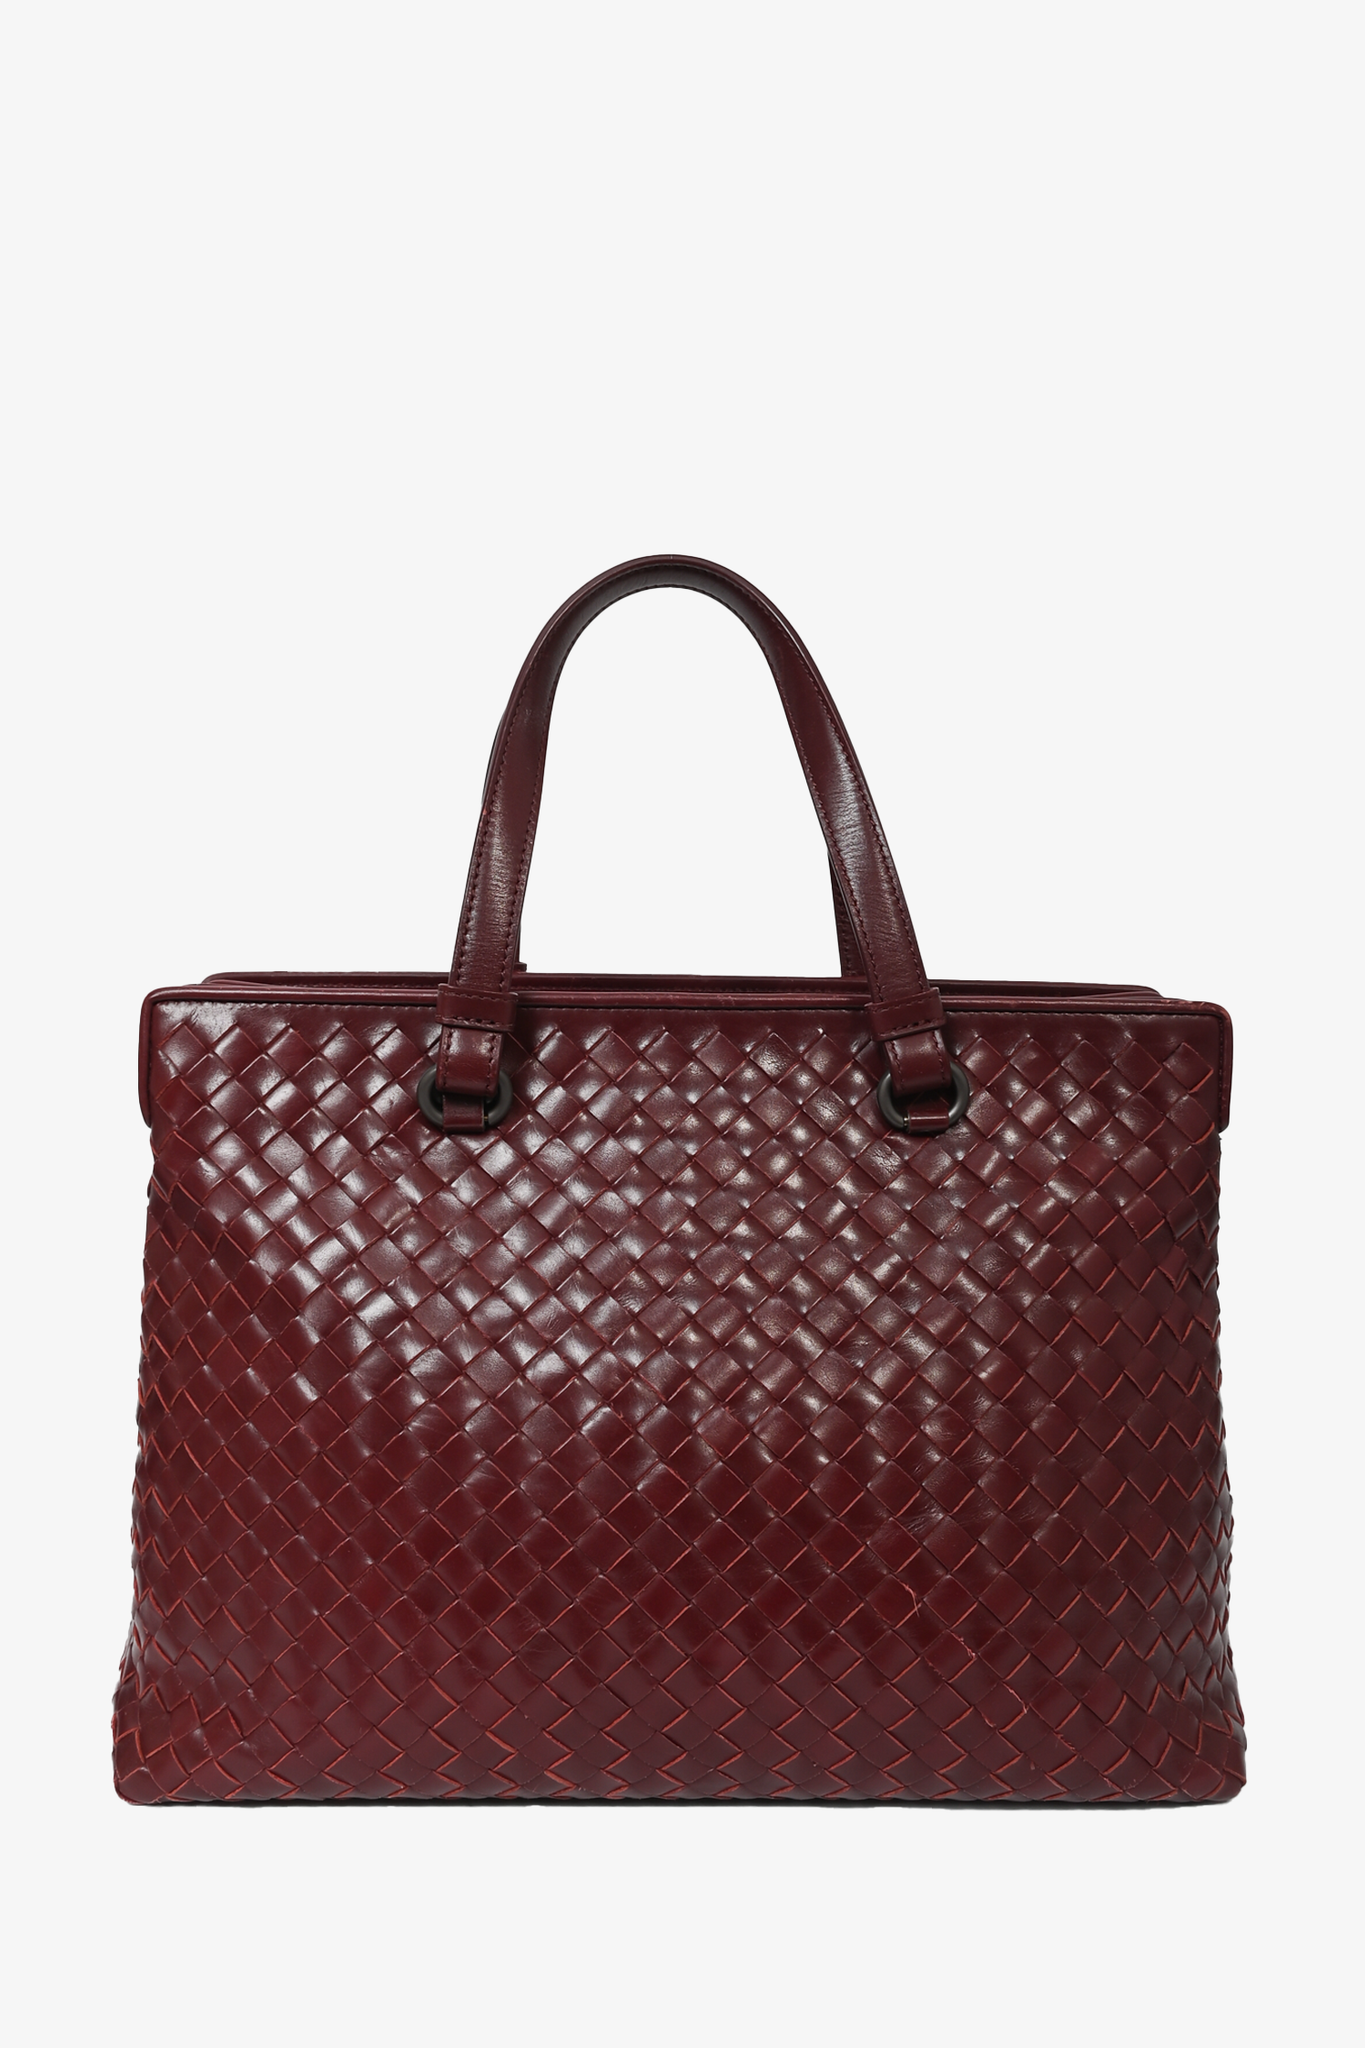 Bottega Veneta Burgundy Intrecciato Leather Bag